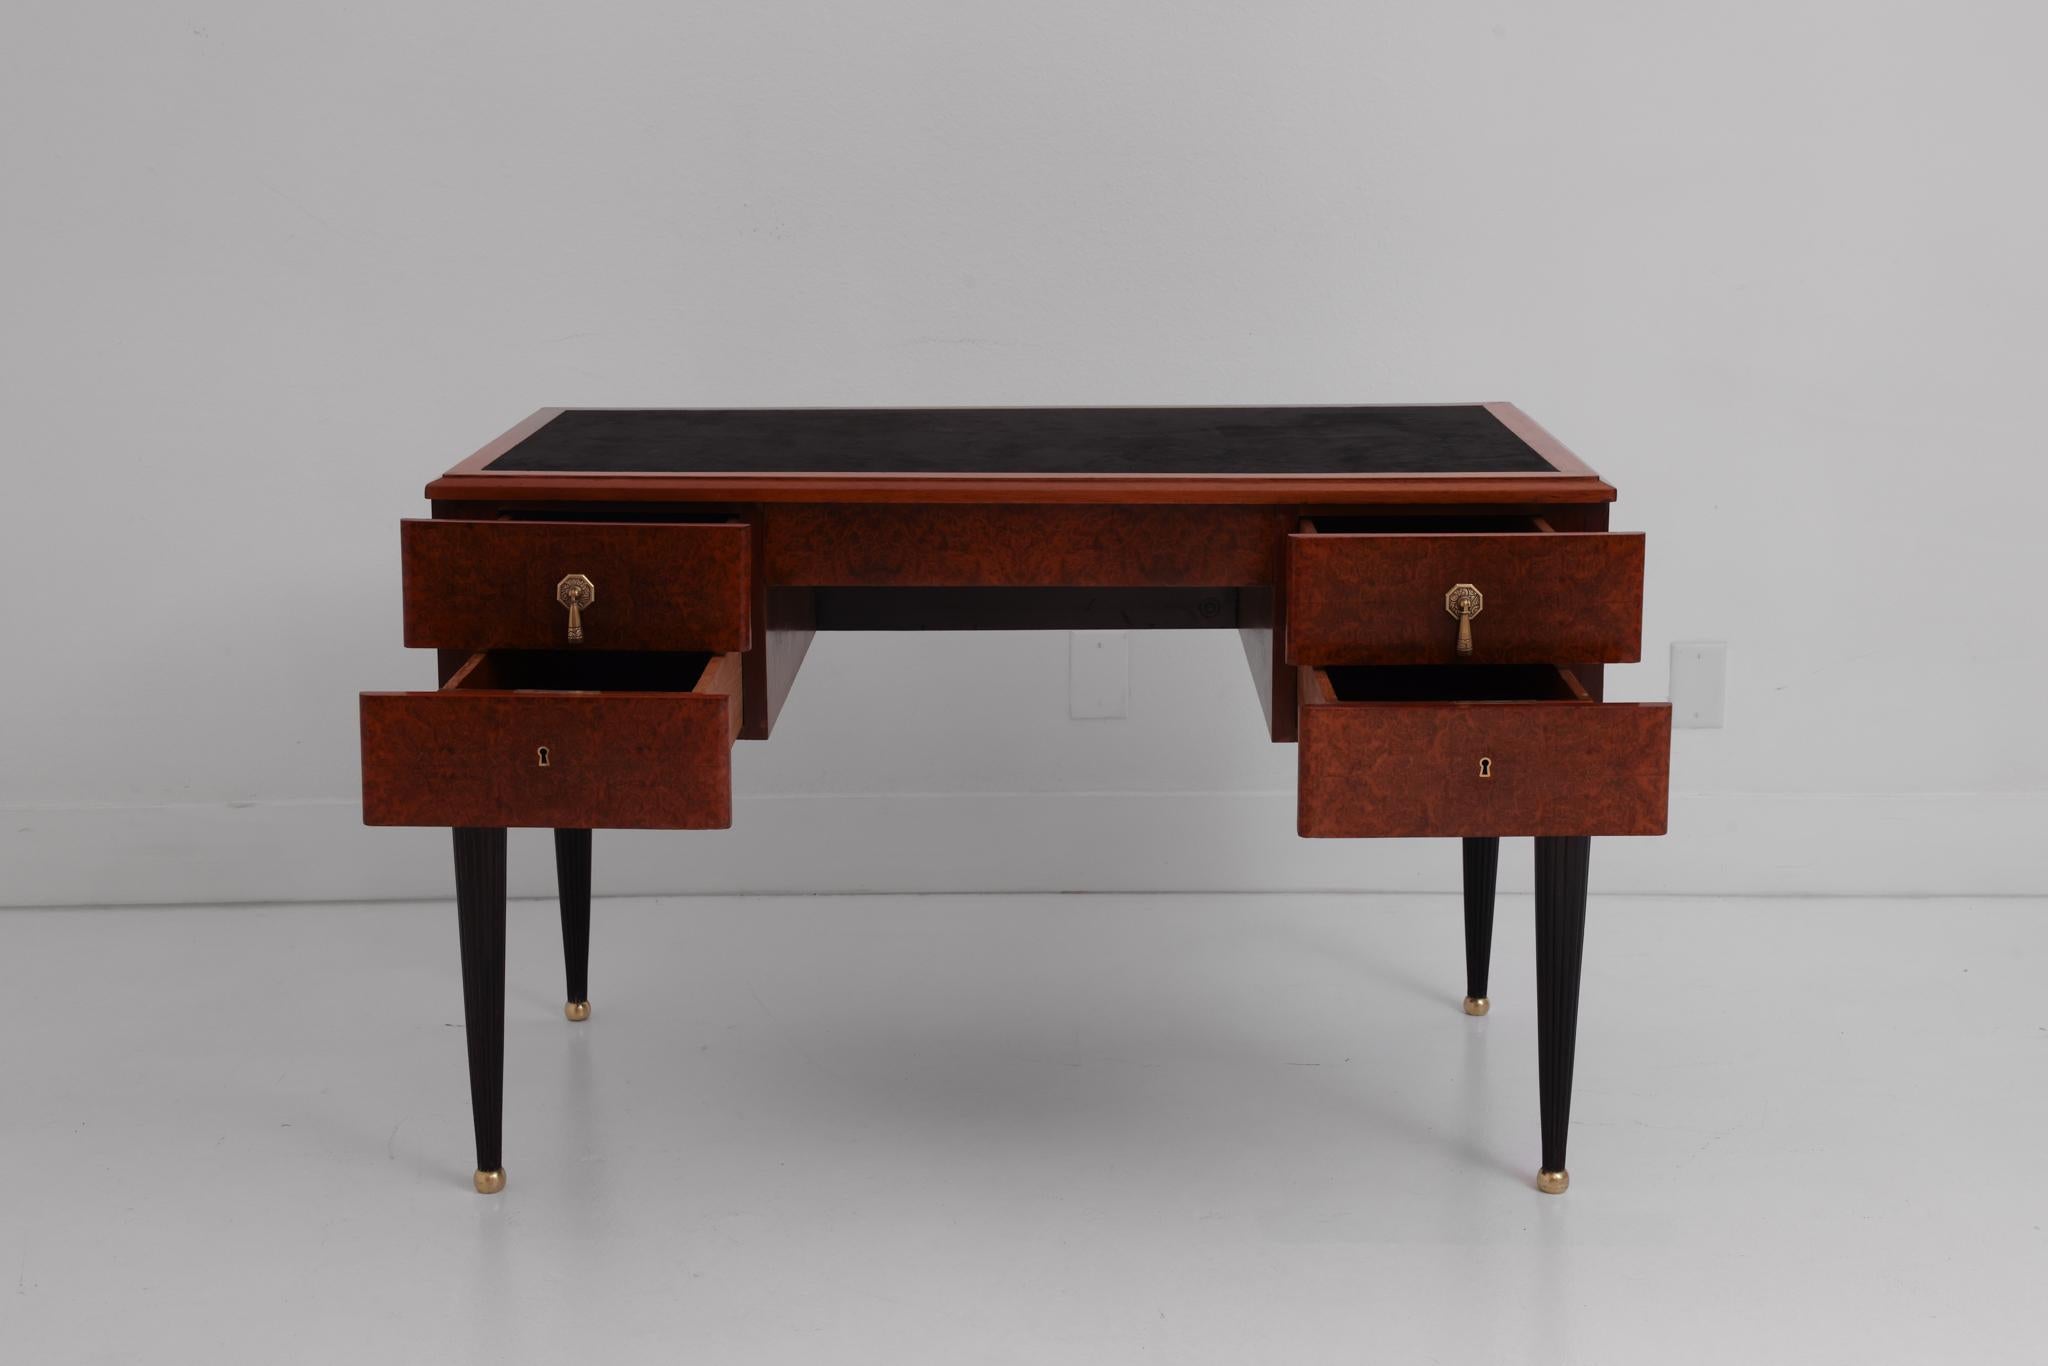 Polished Art Deco Burlwood Desk with Fluted Legs and Brass Details